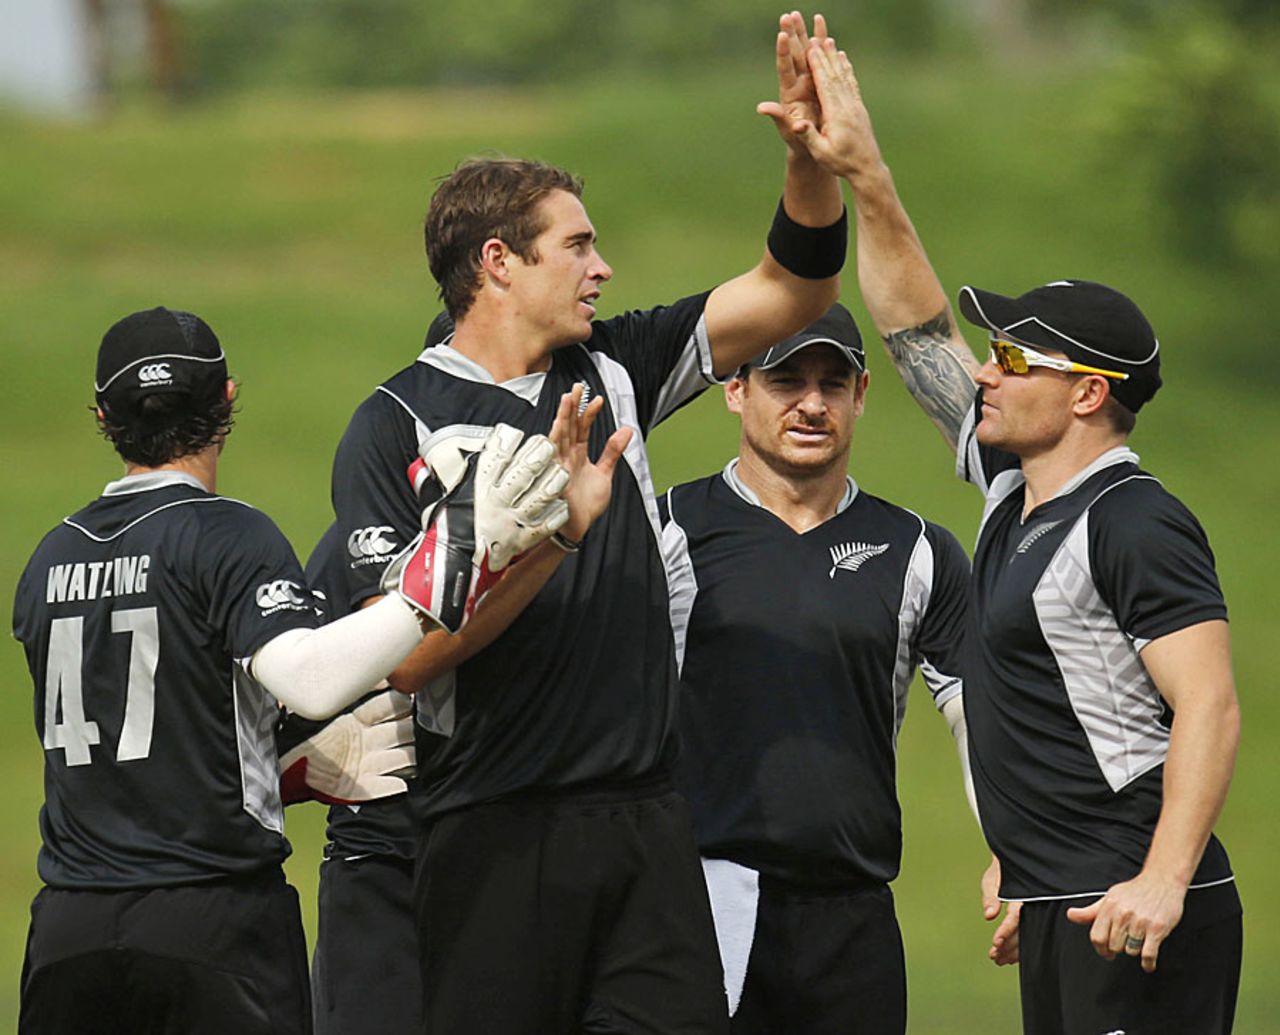 Tim Southee celebrates a wicket with his team-mates, Sri Lanka v New Zealand, 5th ODI, Hambantota, November 12, 2012